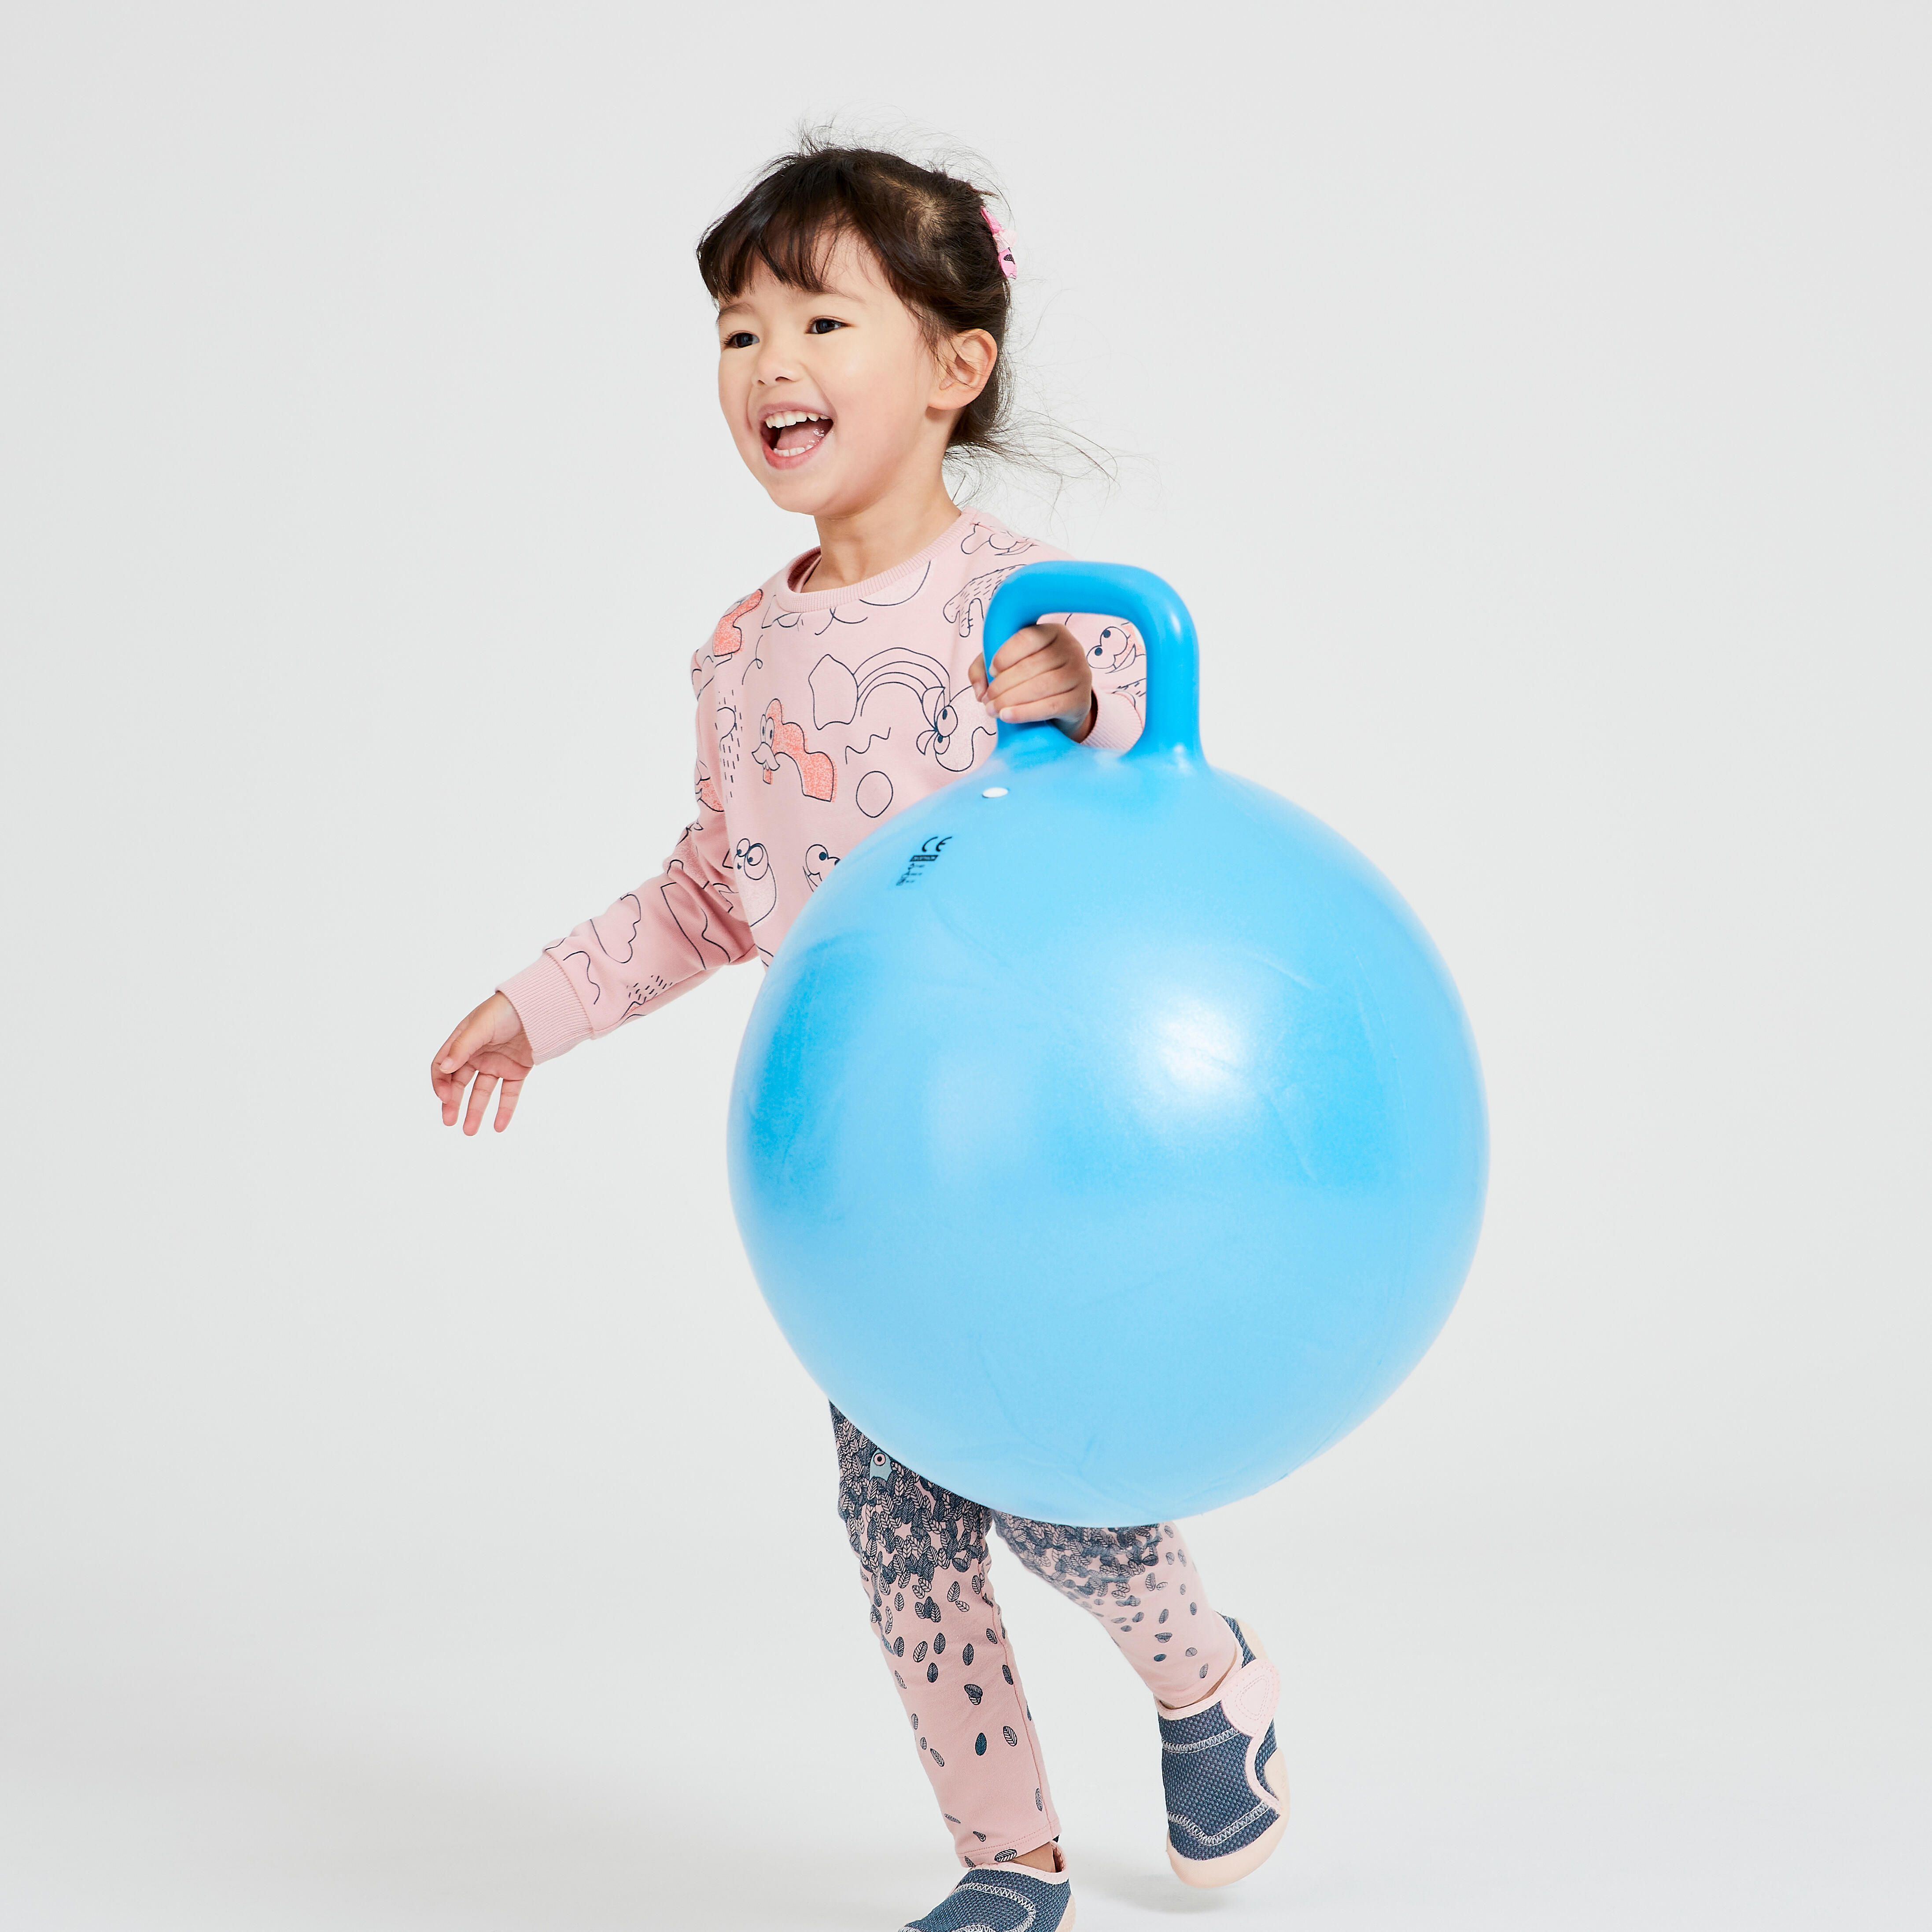 Kids’ Hopper Ball - 45 cm Blue - DOMYOS